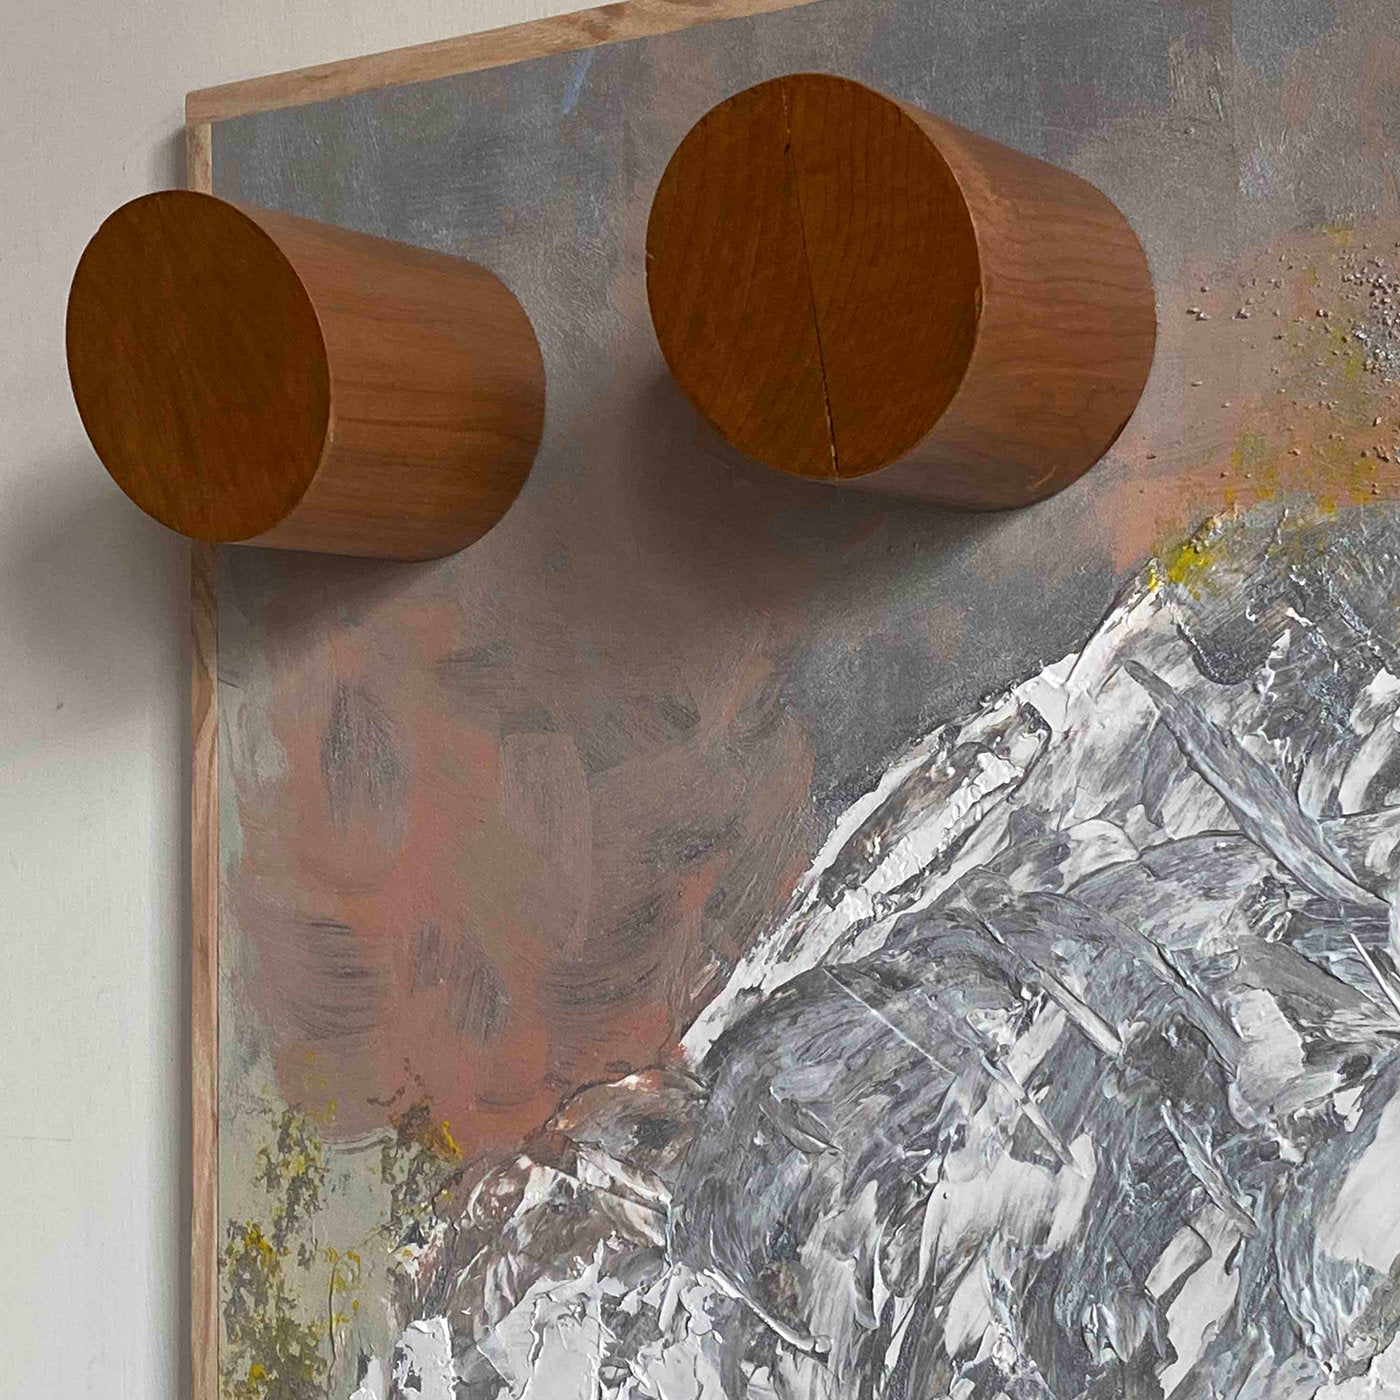 Tempesta Decorative Panel and Wall Hanger by Mascia Meccani - Alternative view 5